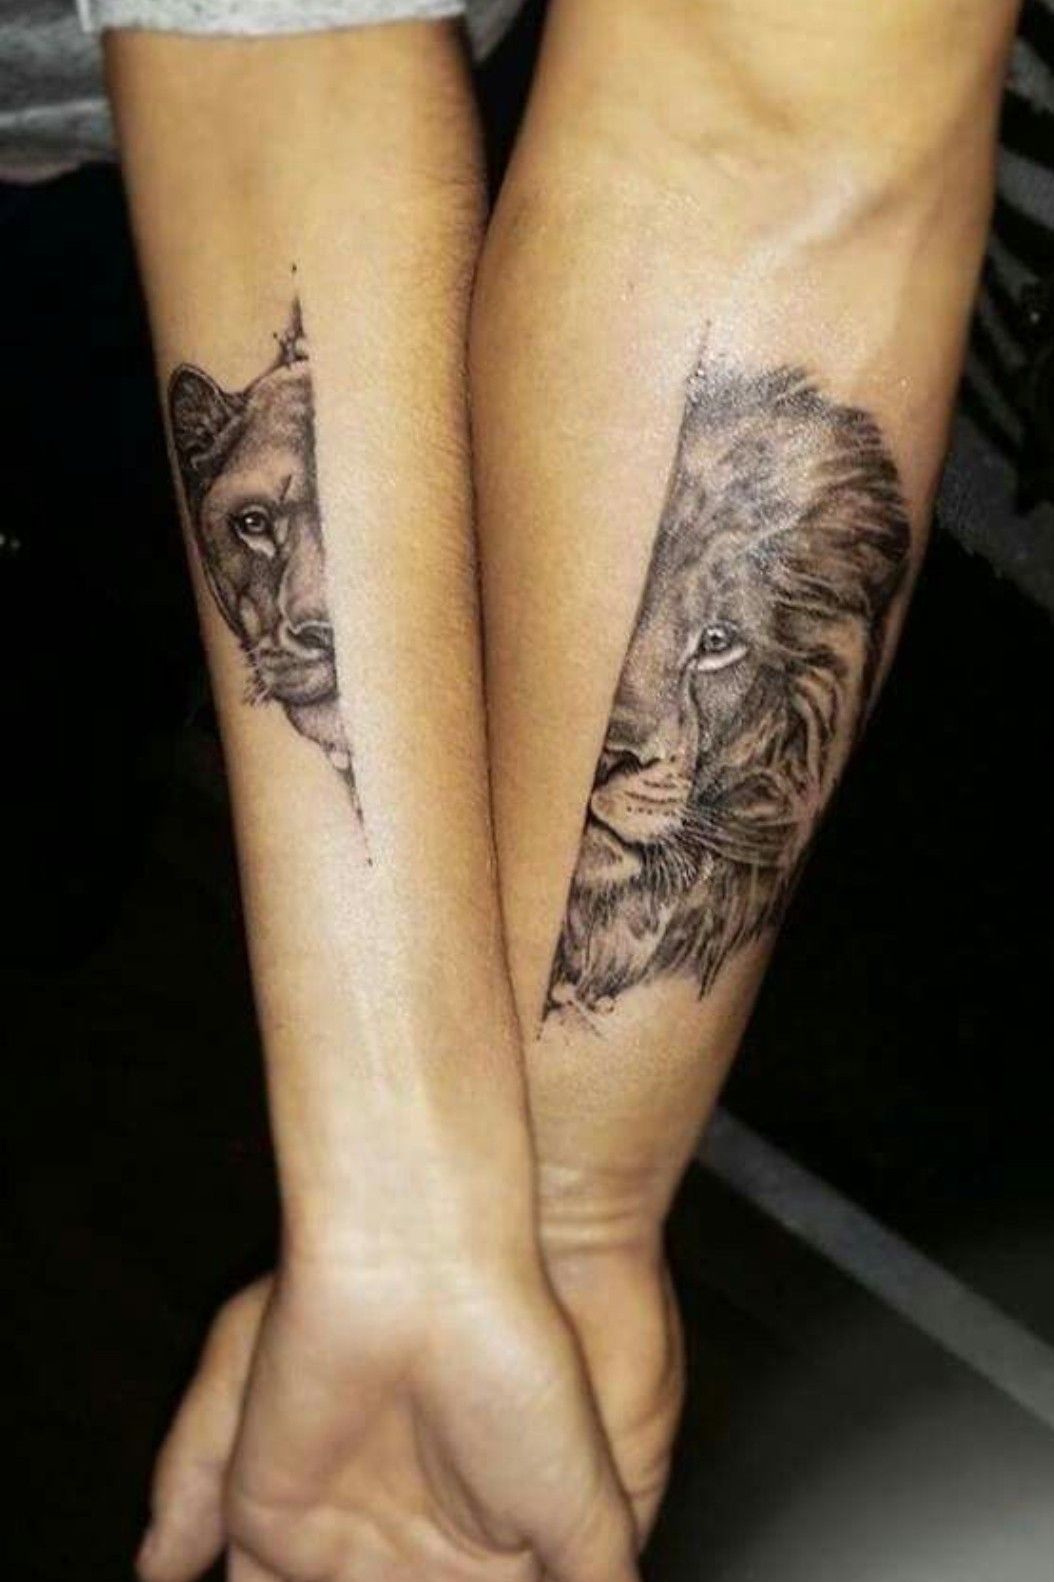 Matching The Lion King tattoo